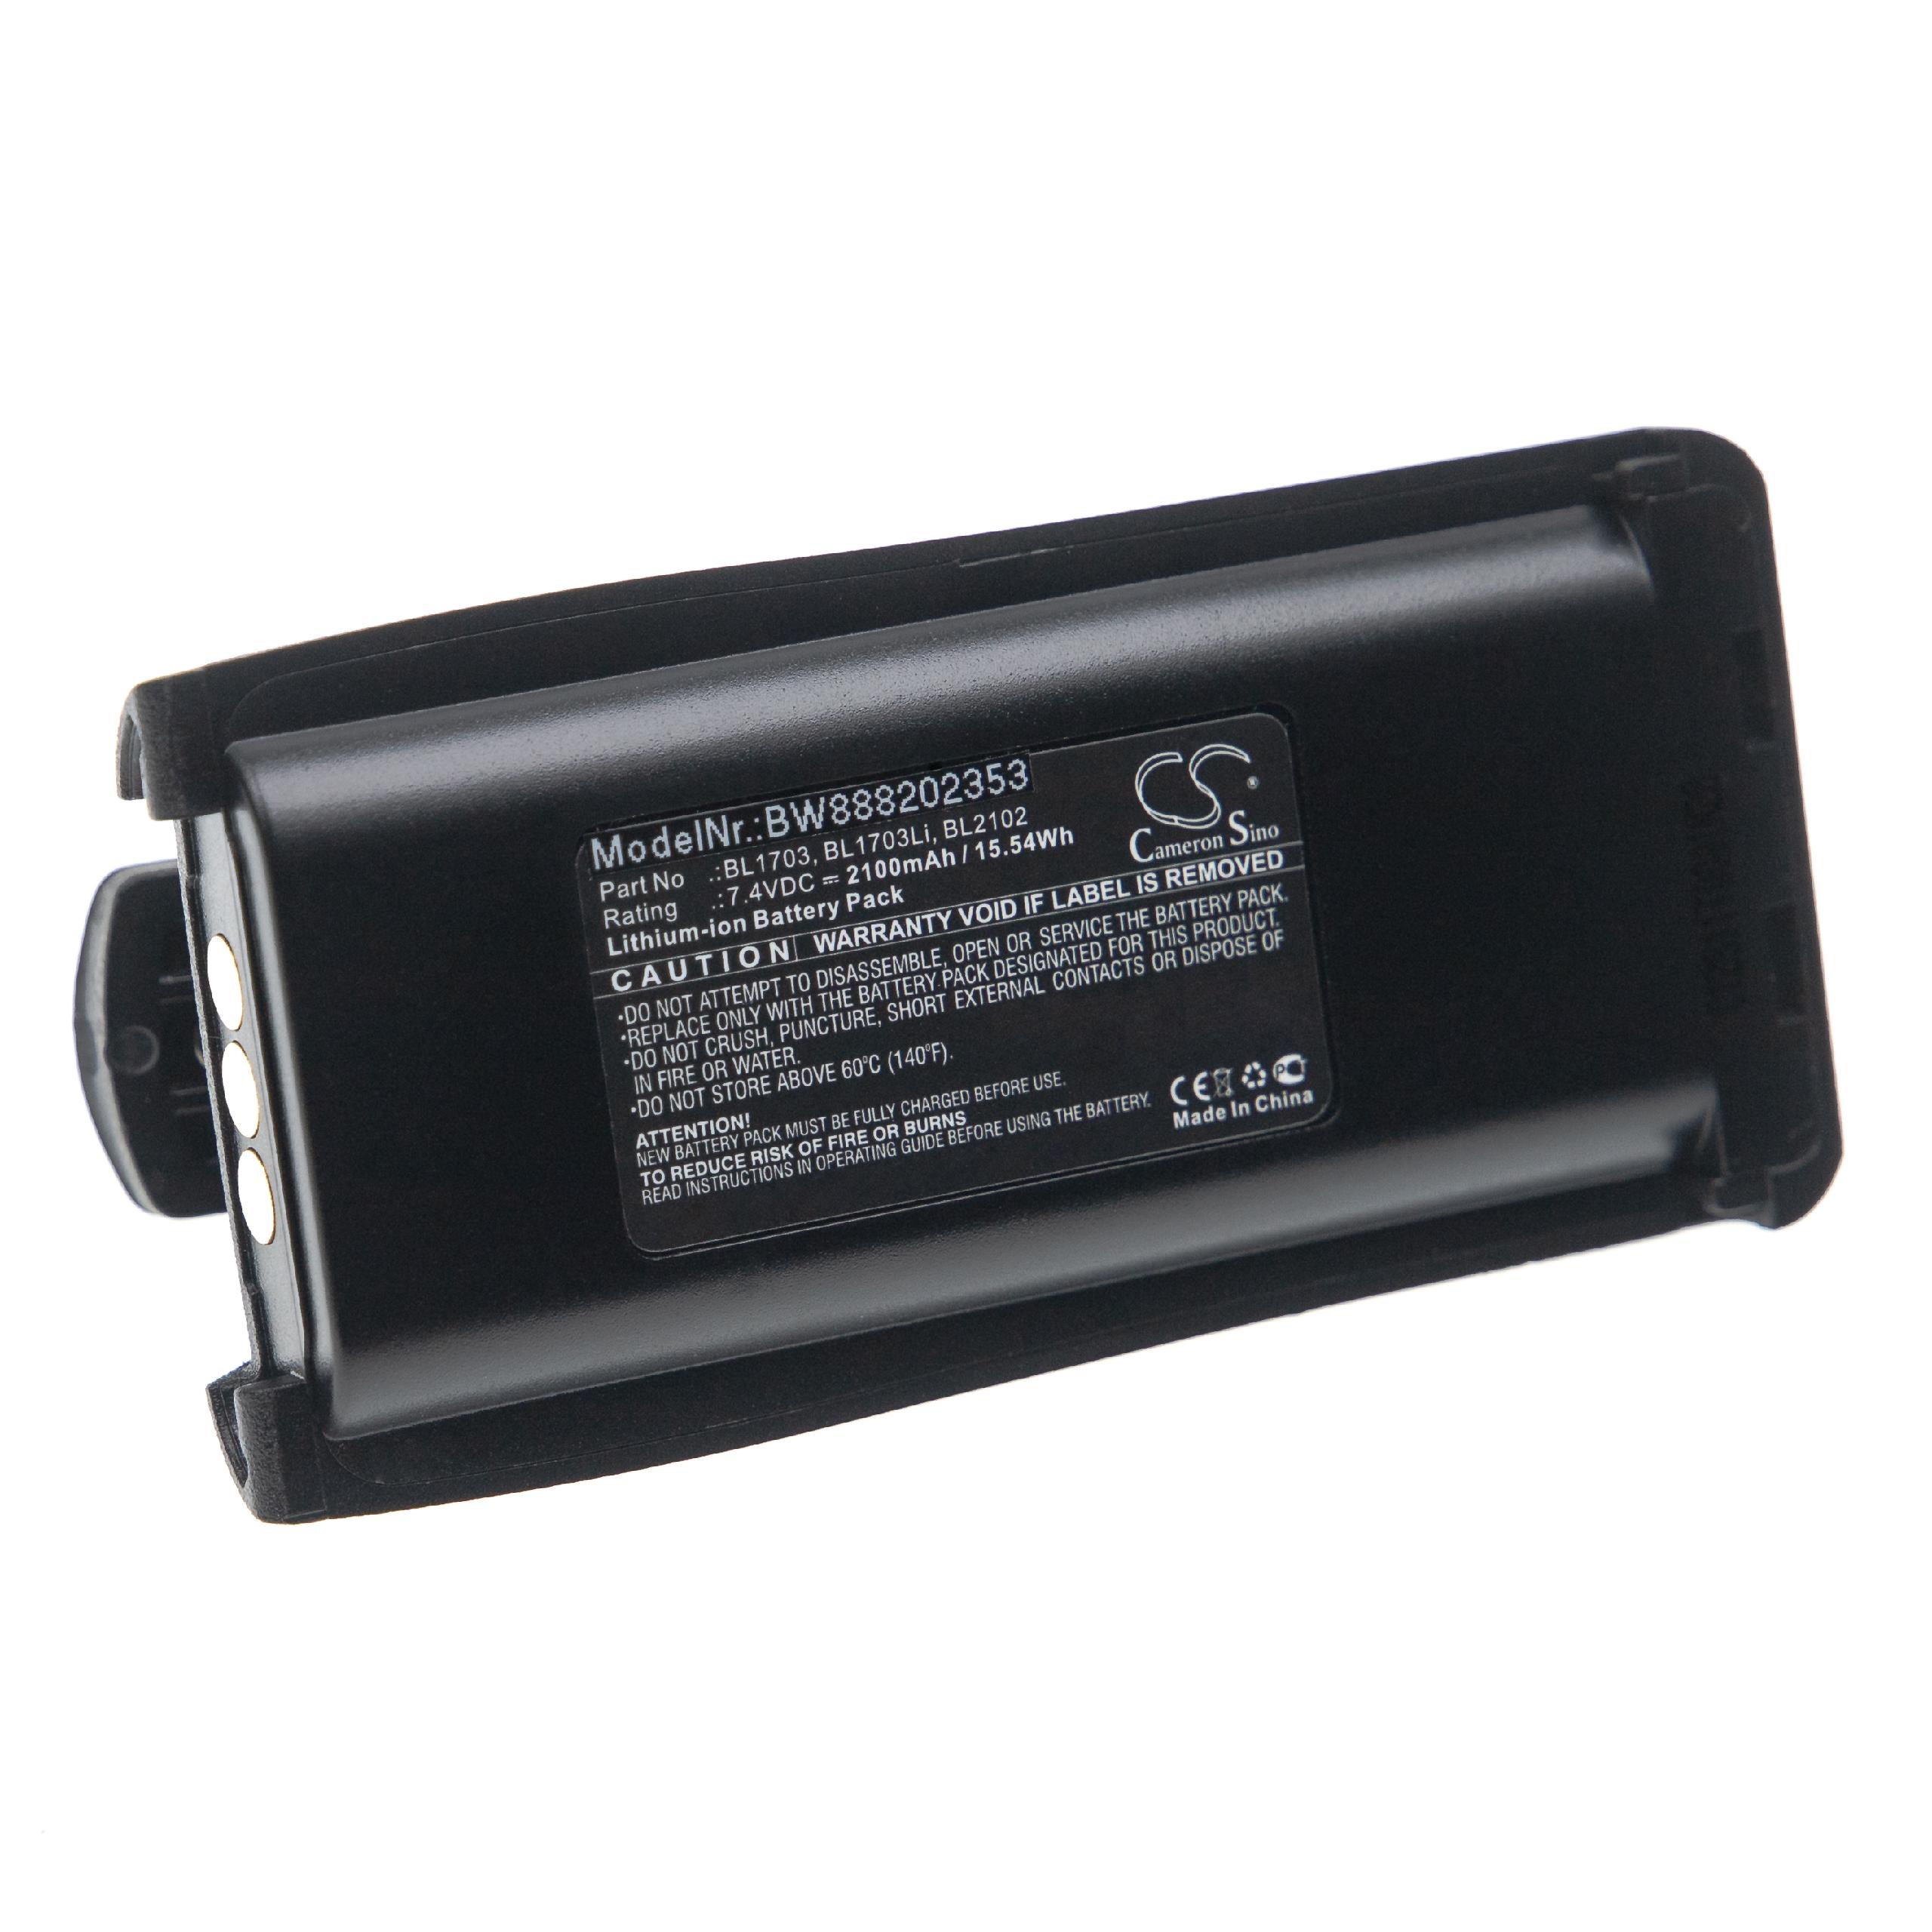 Batería reemplaza Hyt BL1703Li, BL1703, BH1801 para radio, walkie-talkie Hyt / Hytera - 2100 mAh 7,4 V Li-Ion